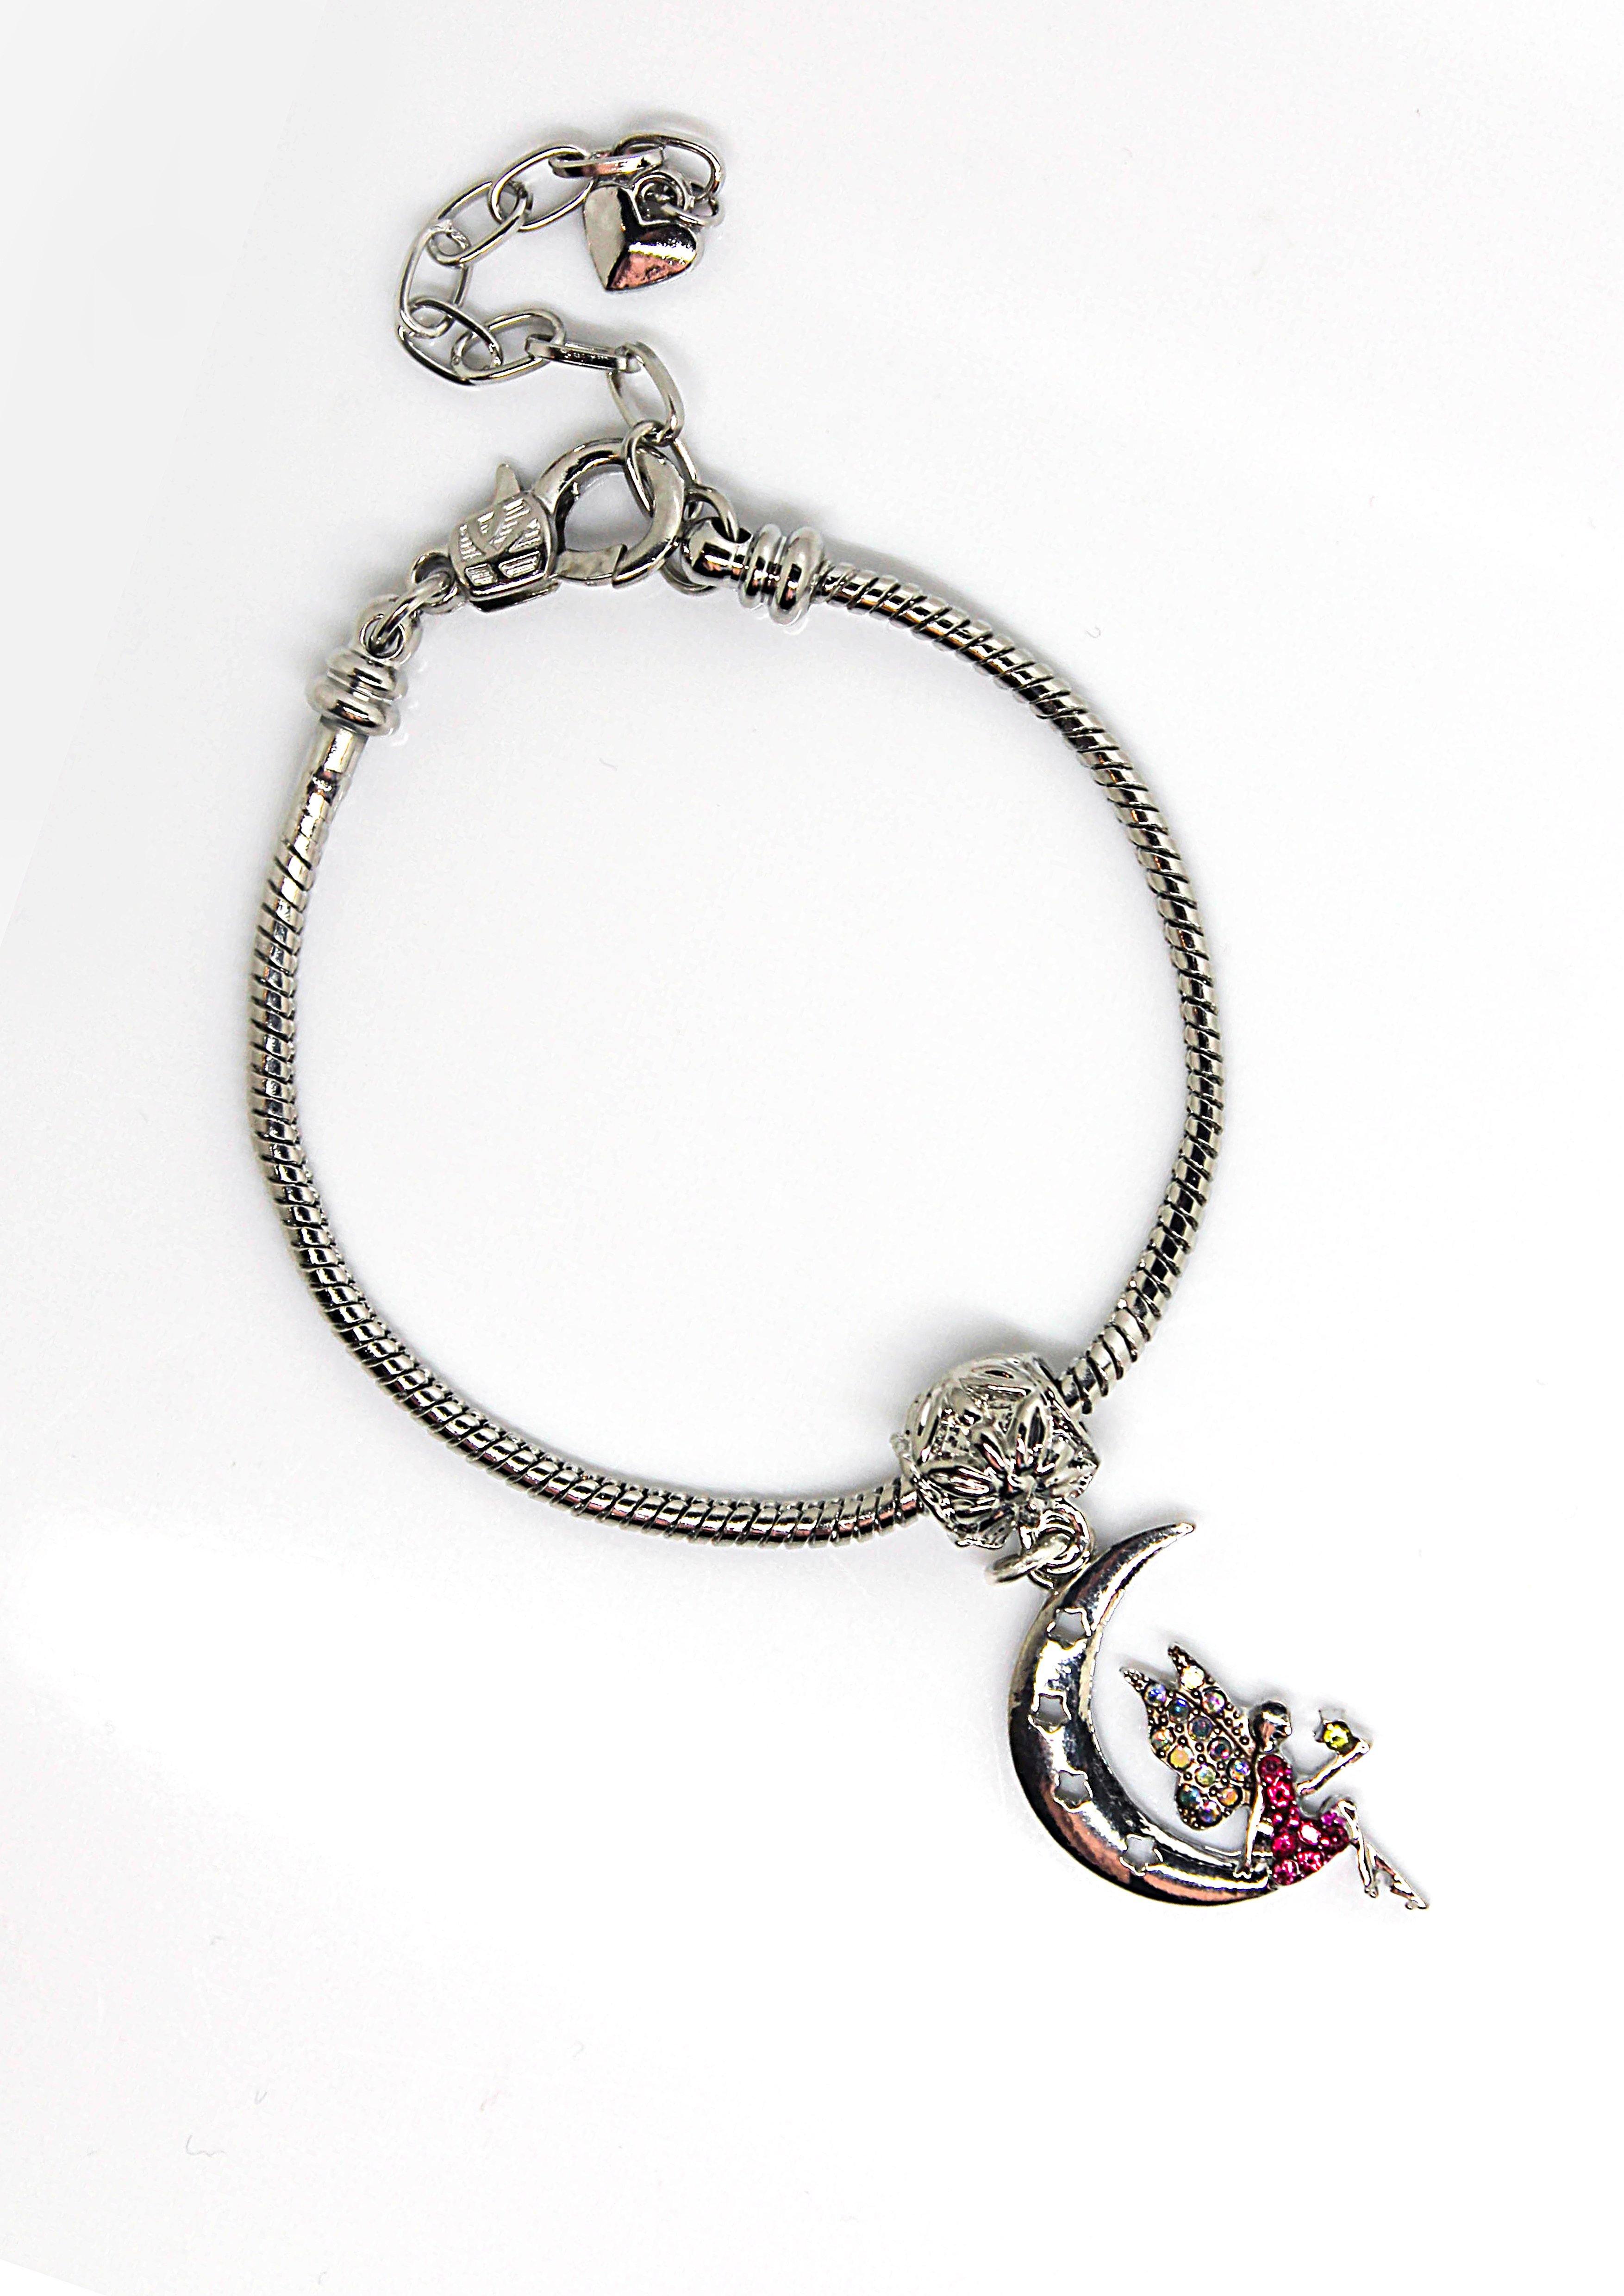 Fairy Moon Charm Bracelet - Wildtouch - Wildtouch